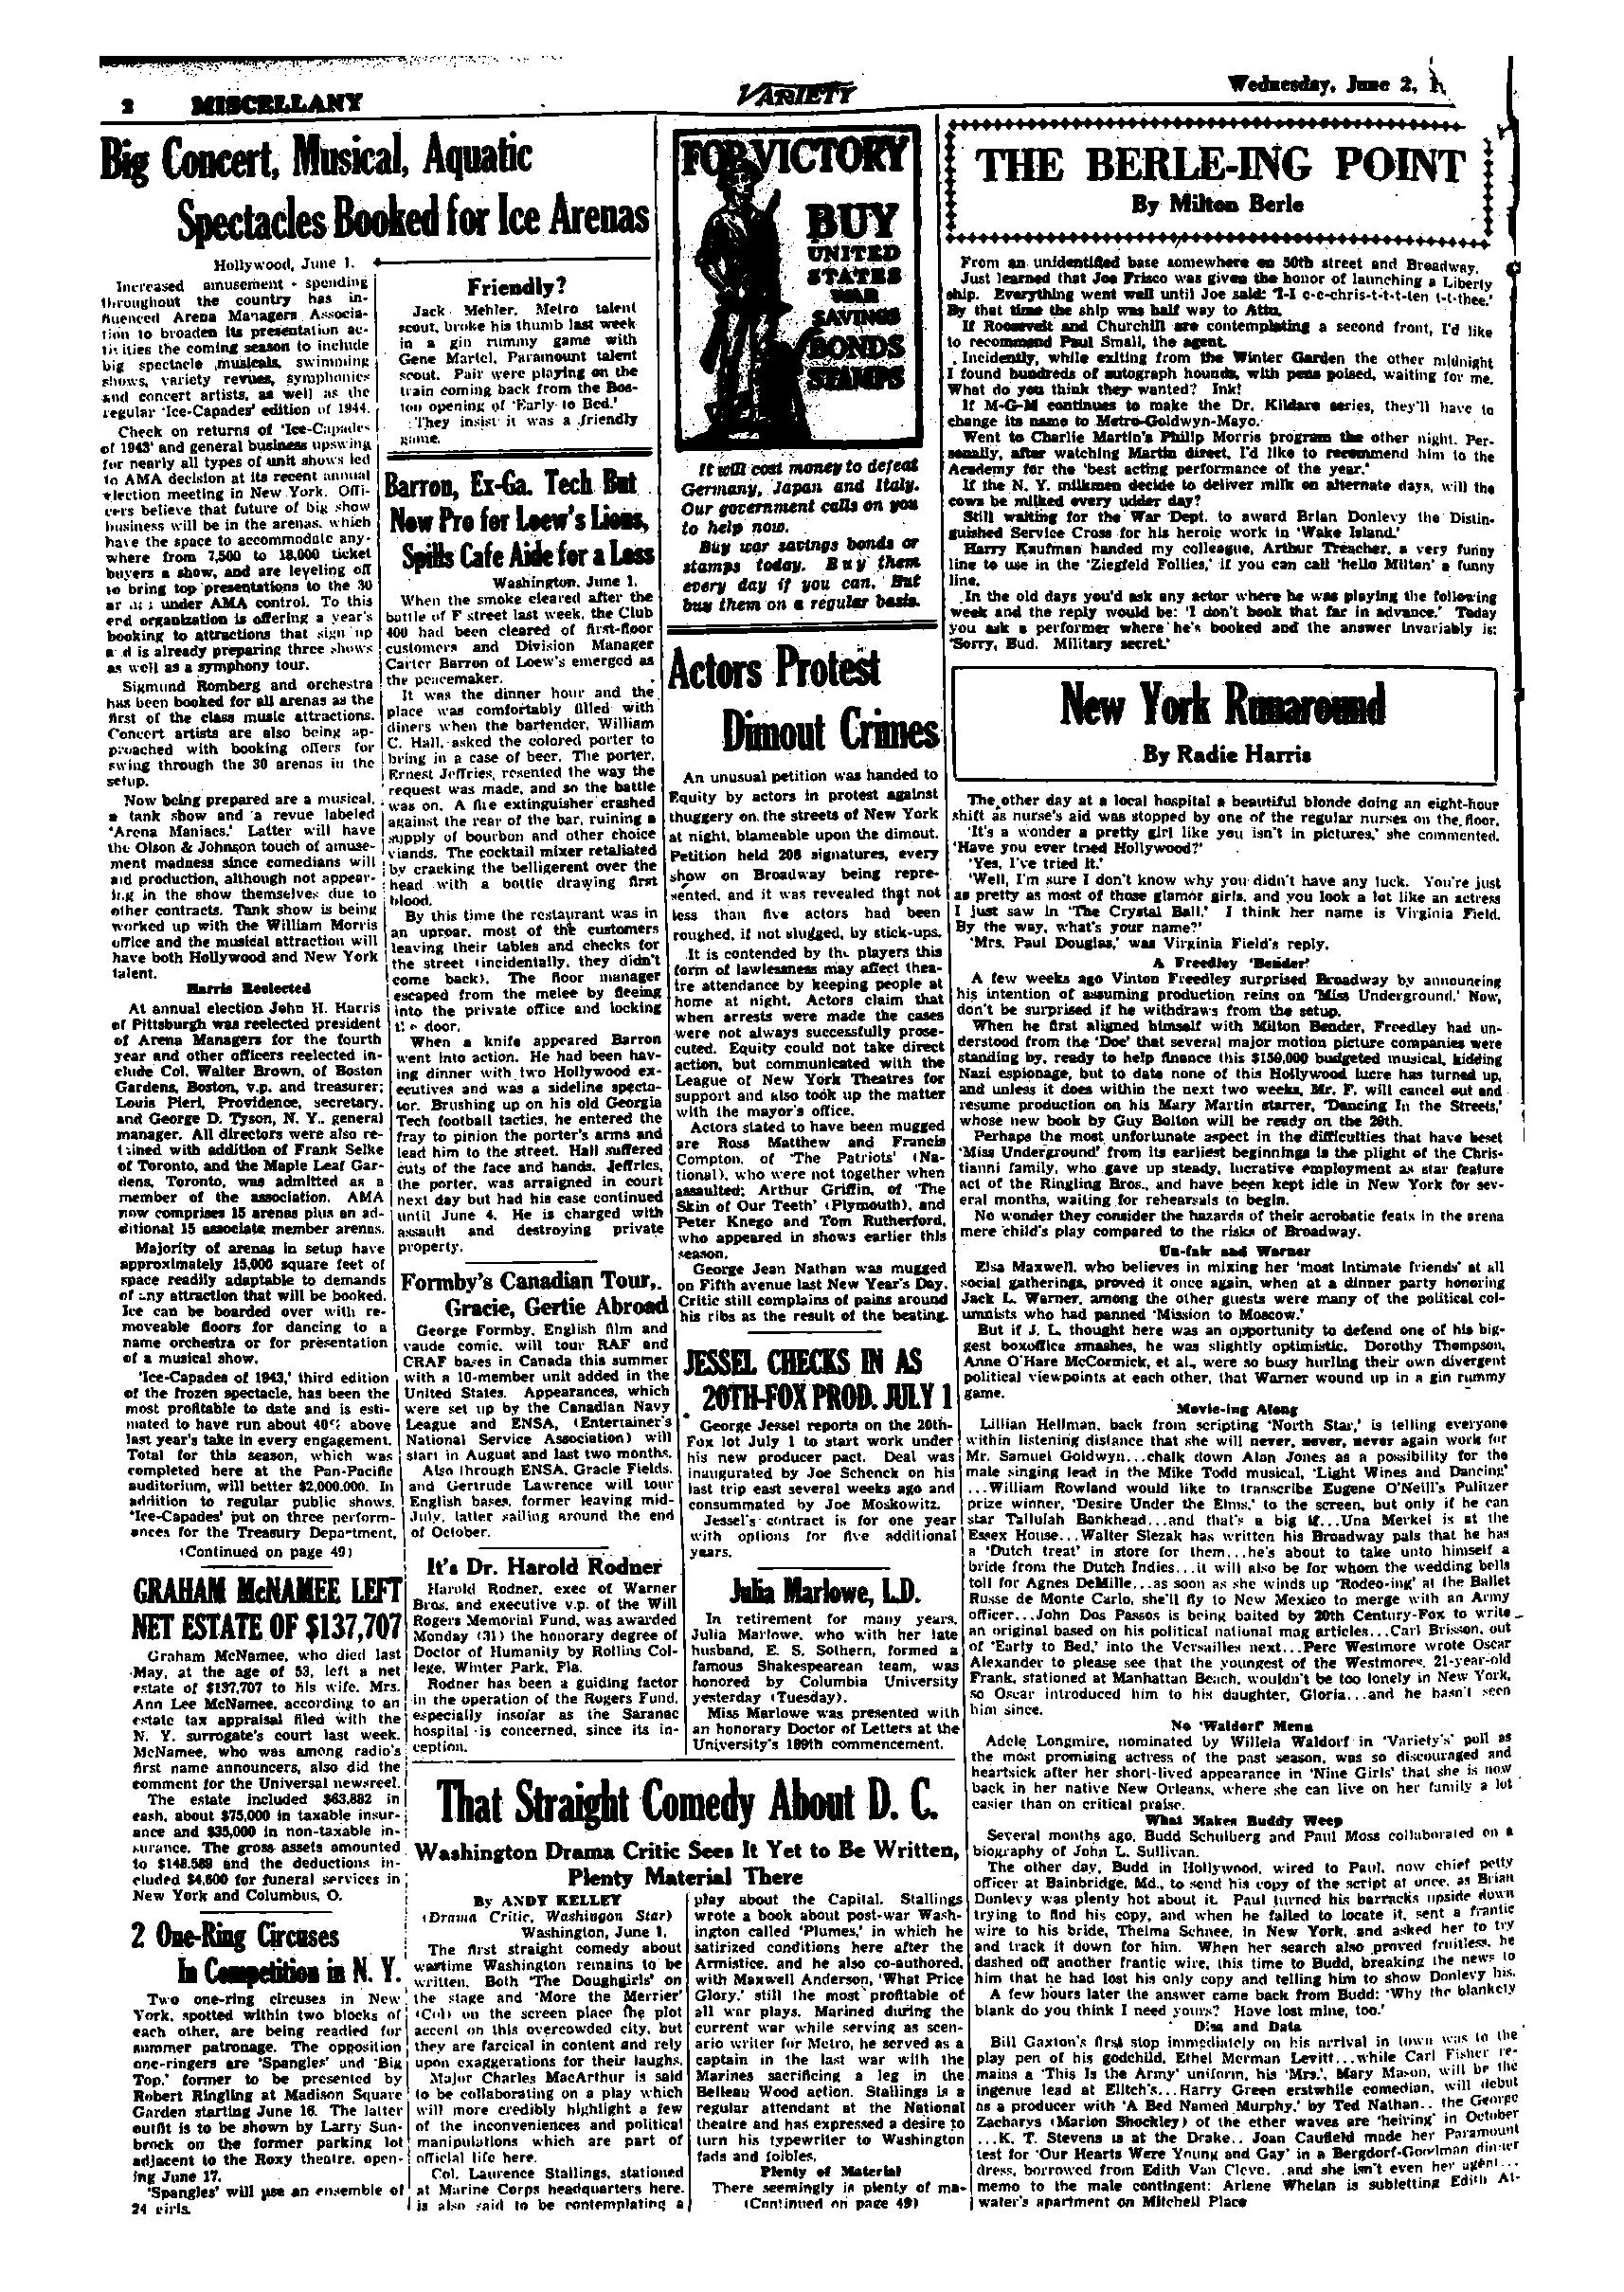 Variety (June 1943)